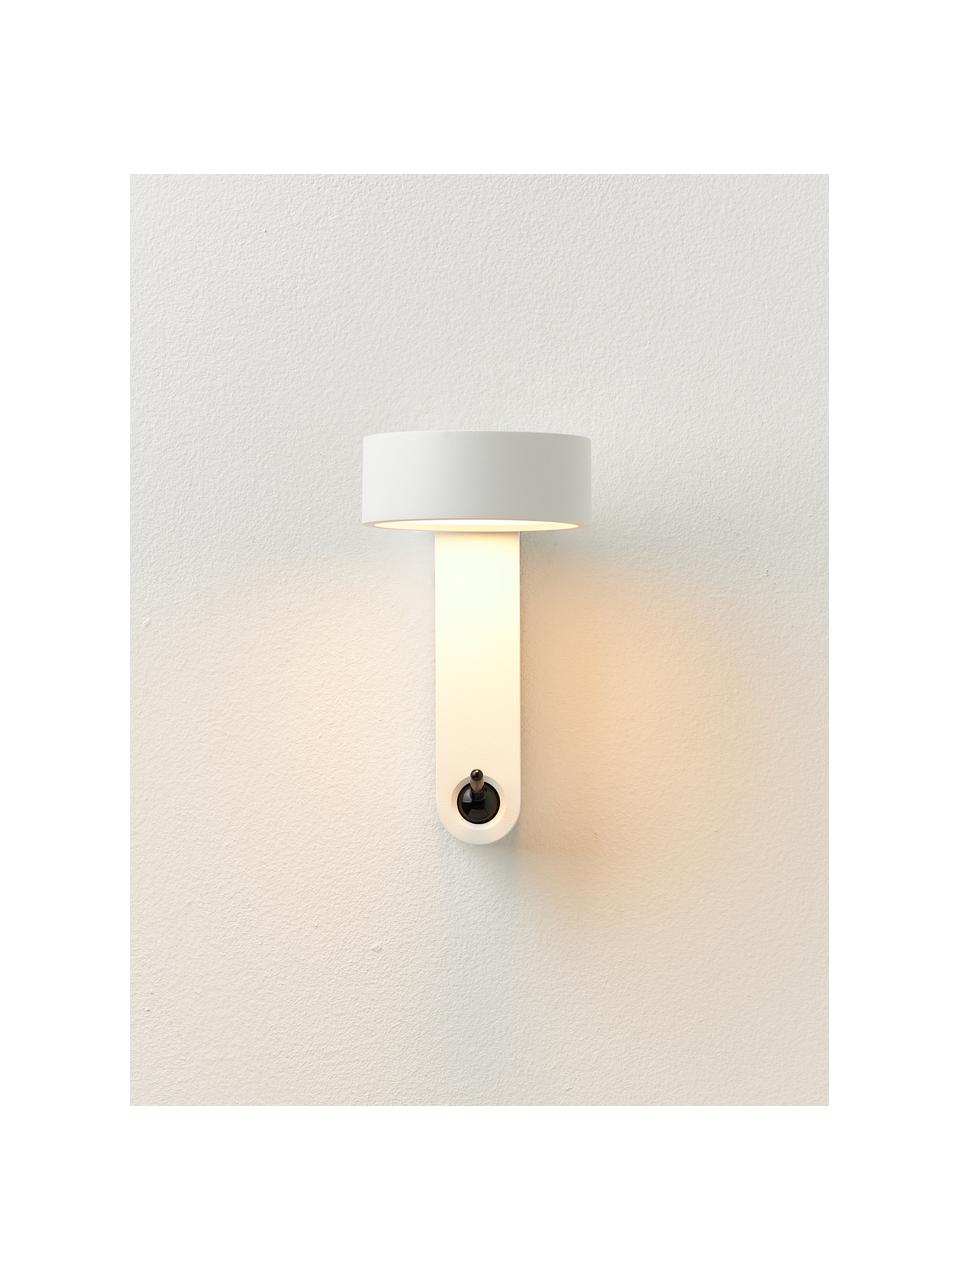 Kleine LED-Wandleuchte Toggle mit verstellbarem Lampenschirm, Aluminium, lackiert, Weiss, matt, B 10 x H 17 cm